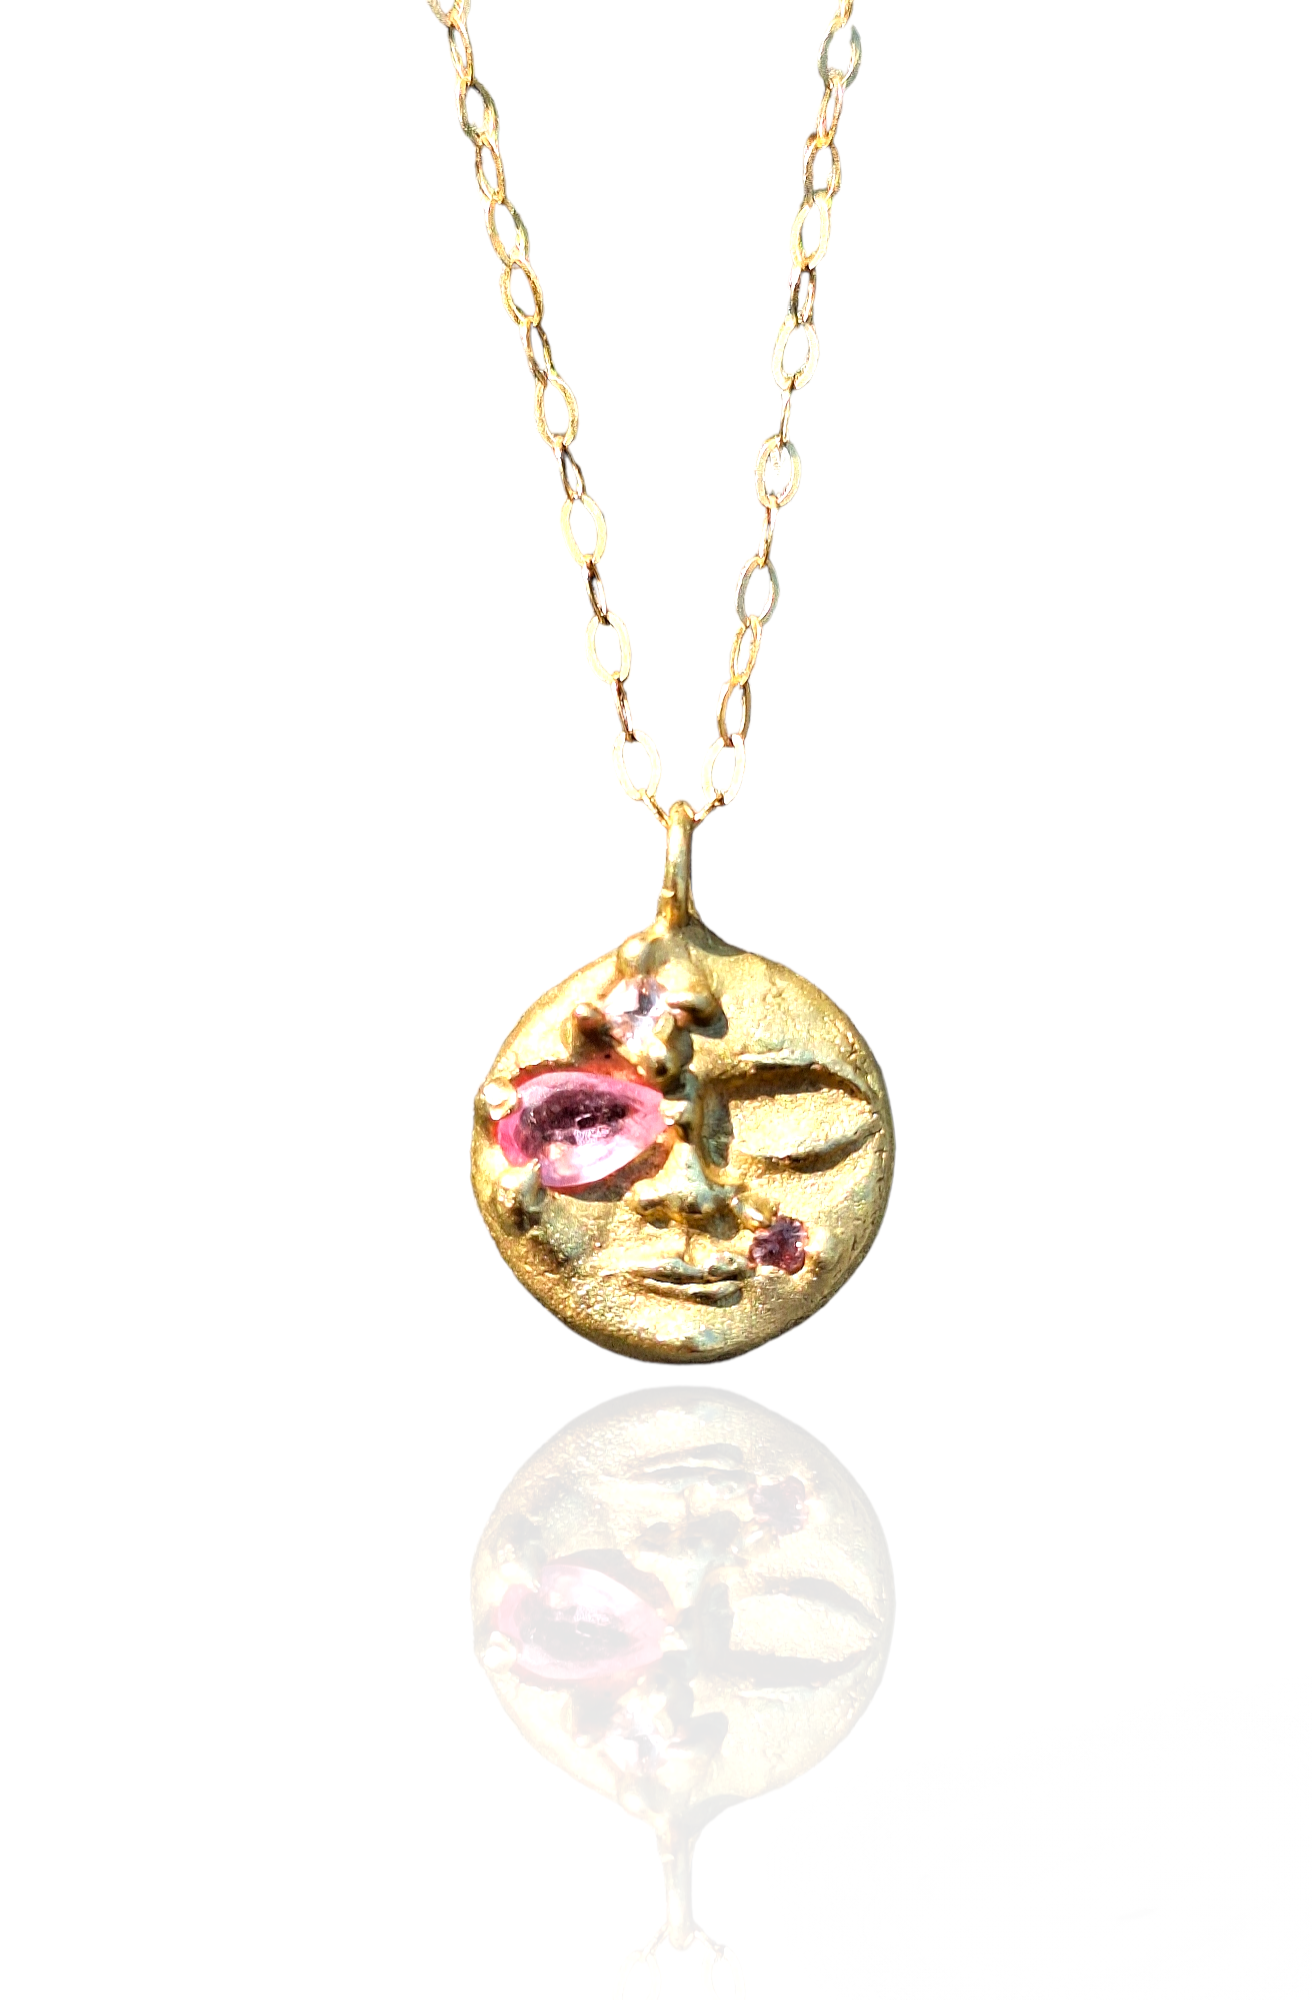 Sulis sun goddess - 9k and pink sapphire sun pendant